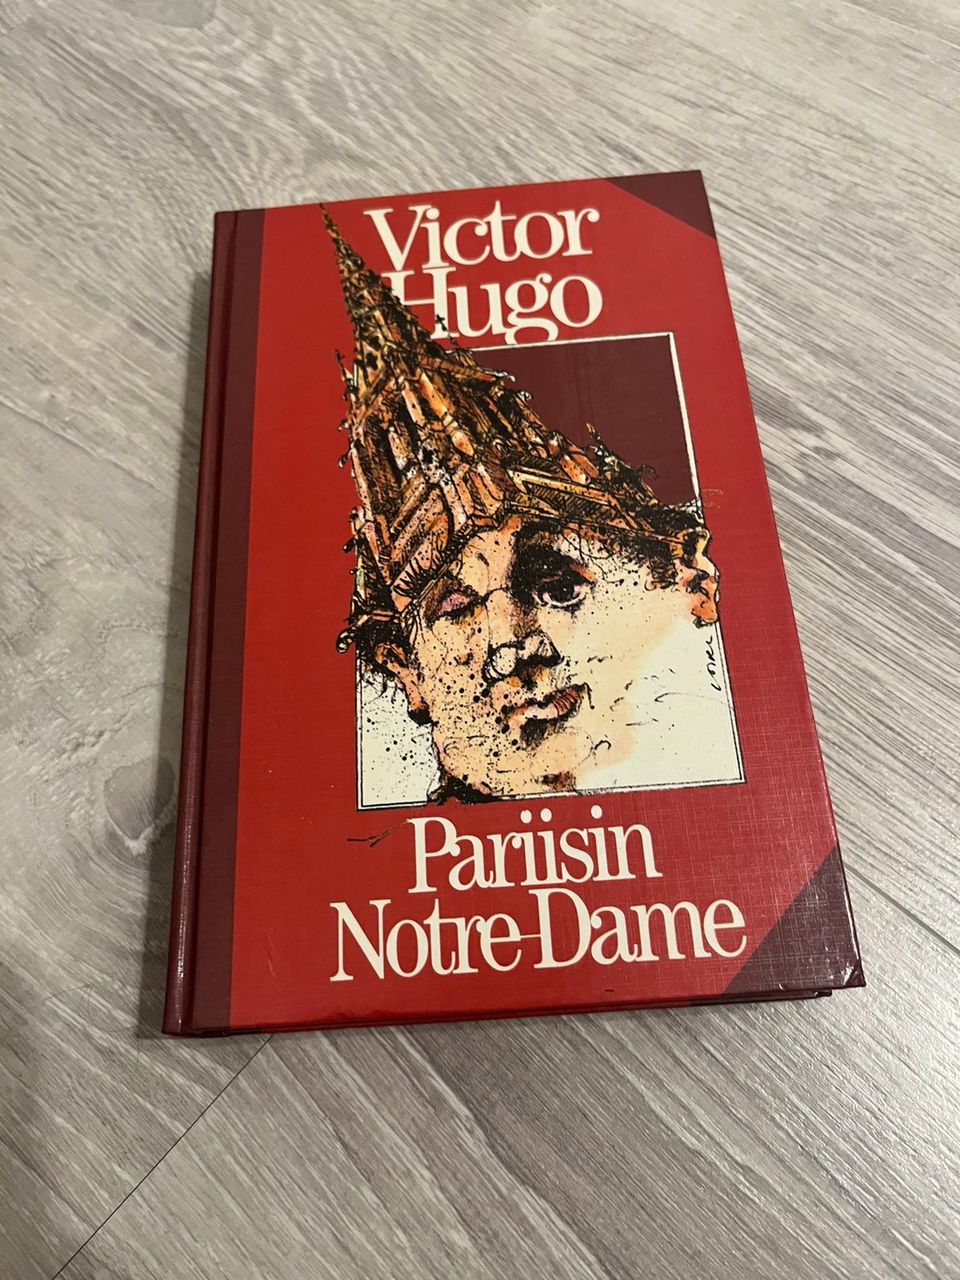 Victor Hugo - Pariisin Notre Dame